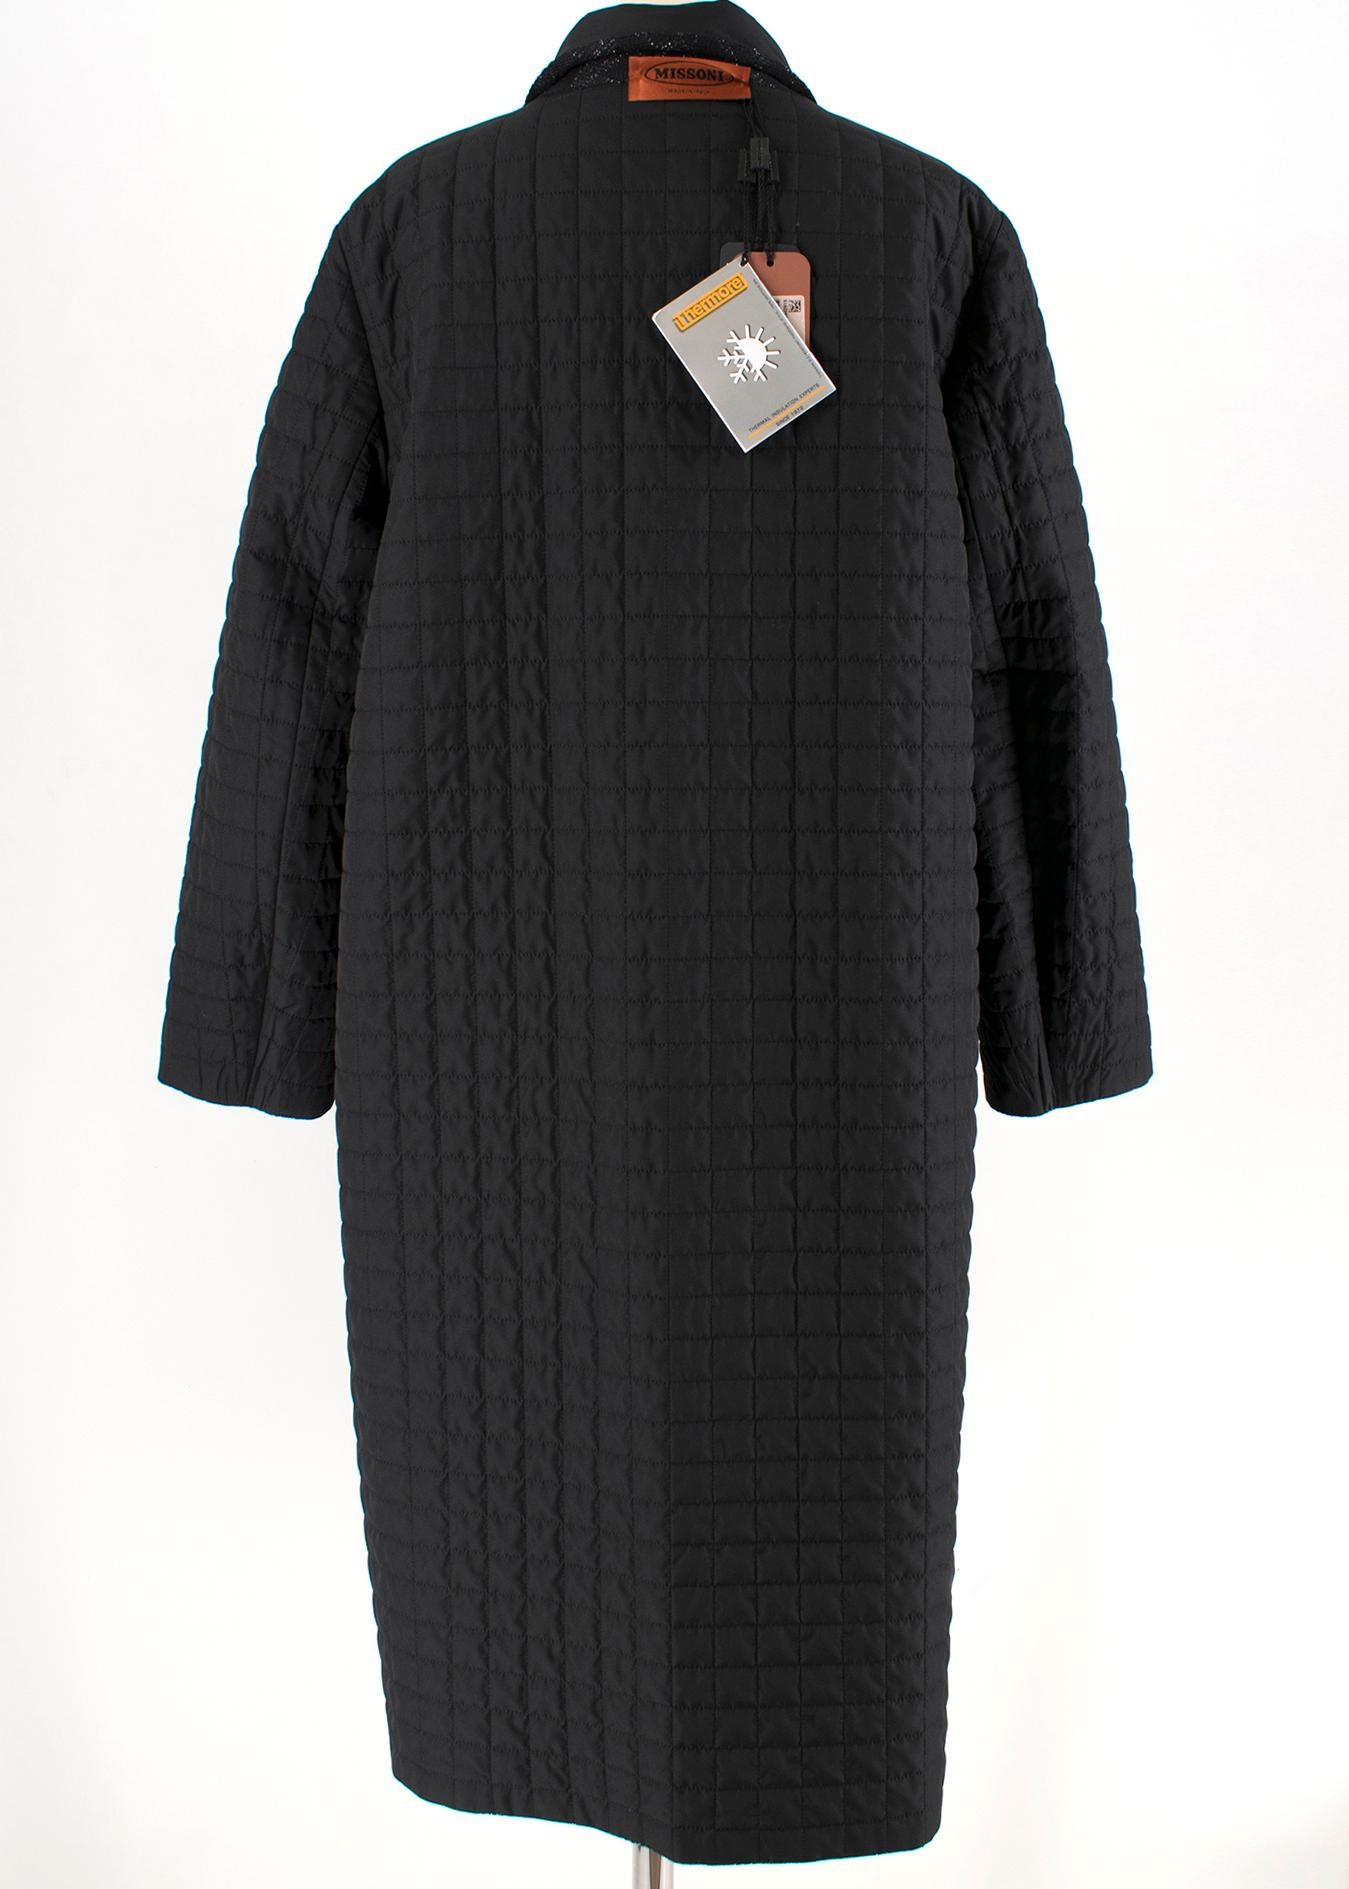 Missoni Reversible Black & Silver Knit Padded Coat 46 IT 6